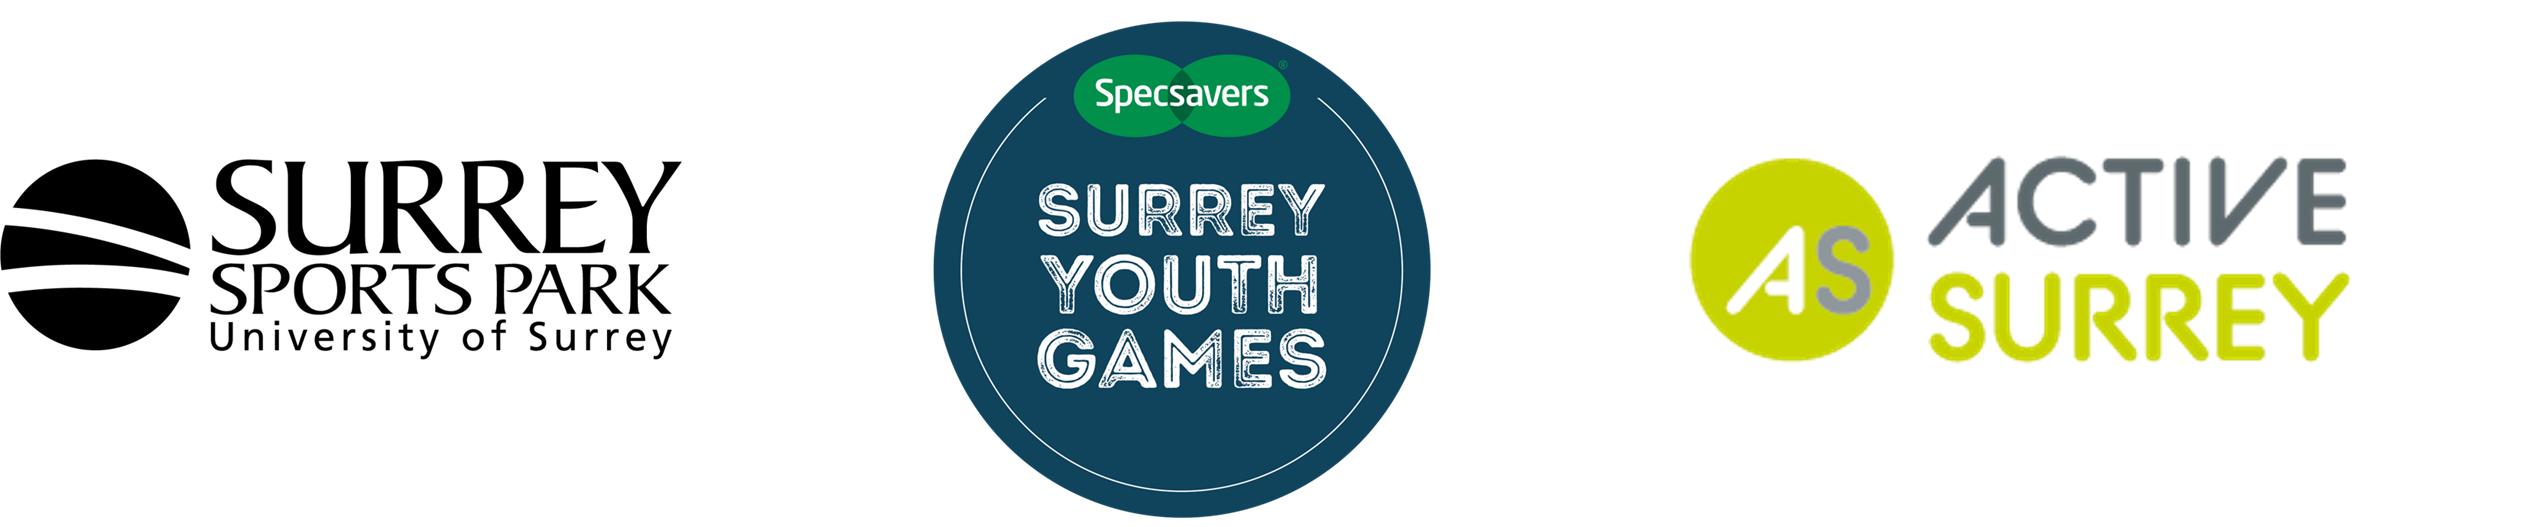 Surrey Sports Park, Surrey Youth Games and Active Surrey logos